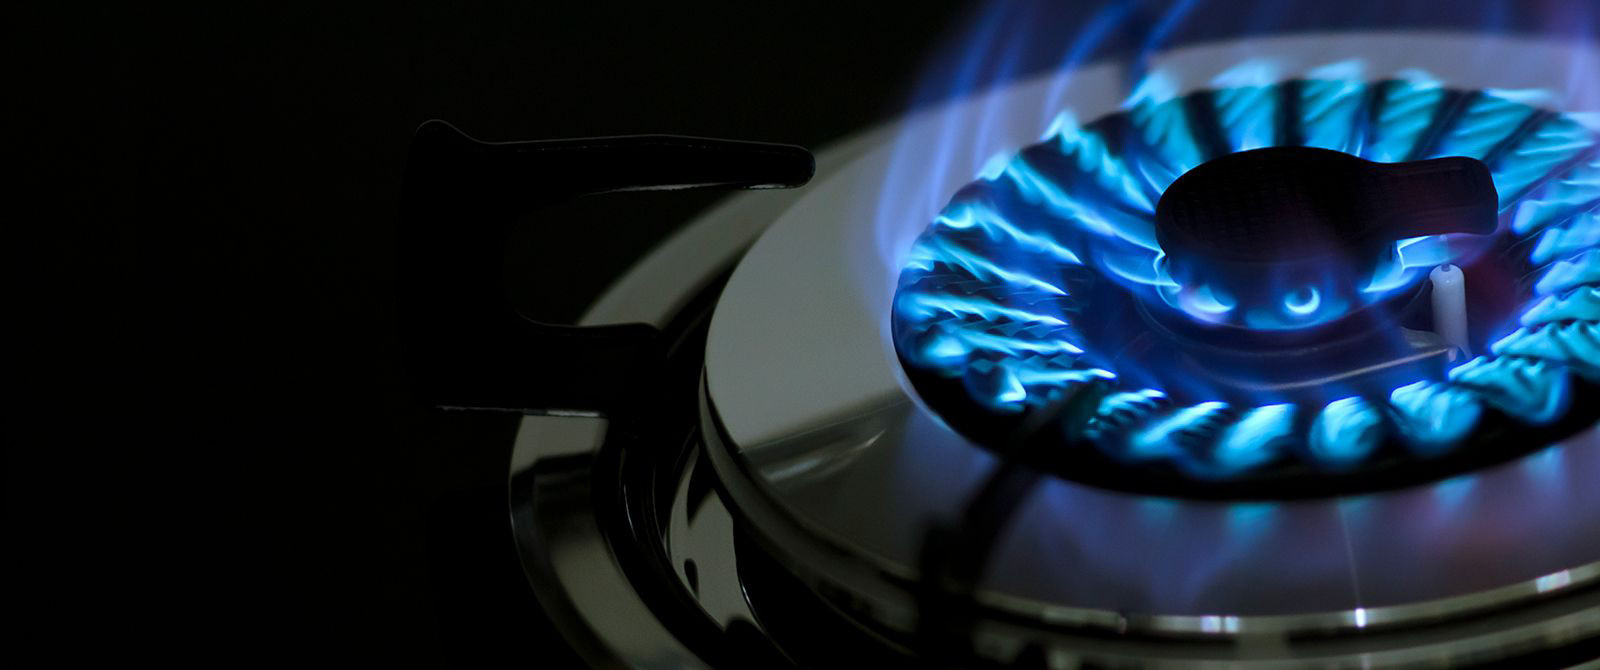 a lit gas stove